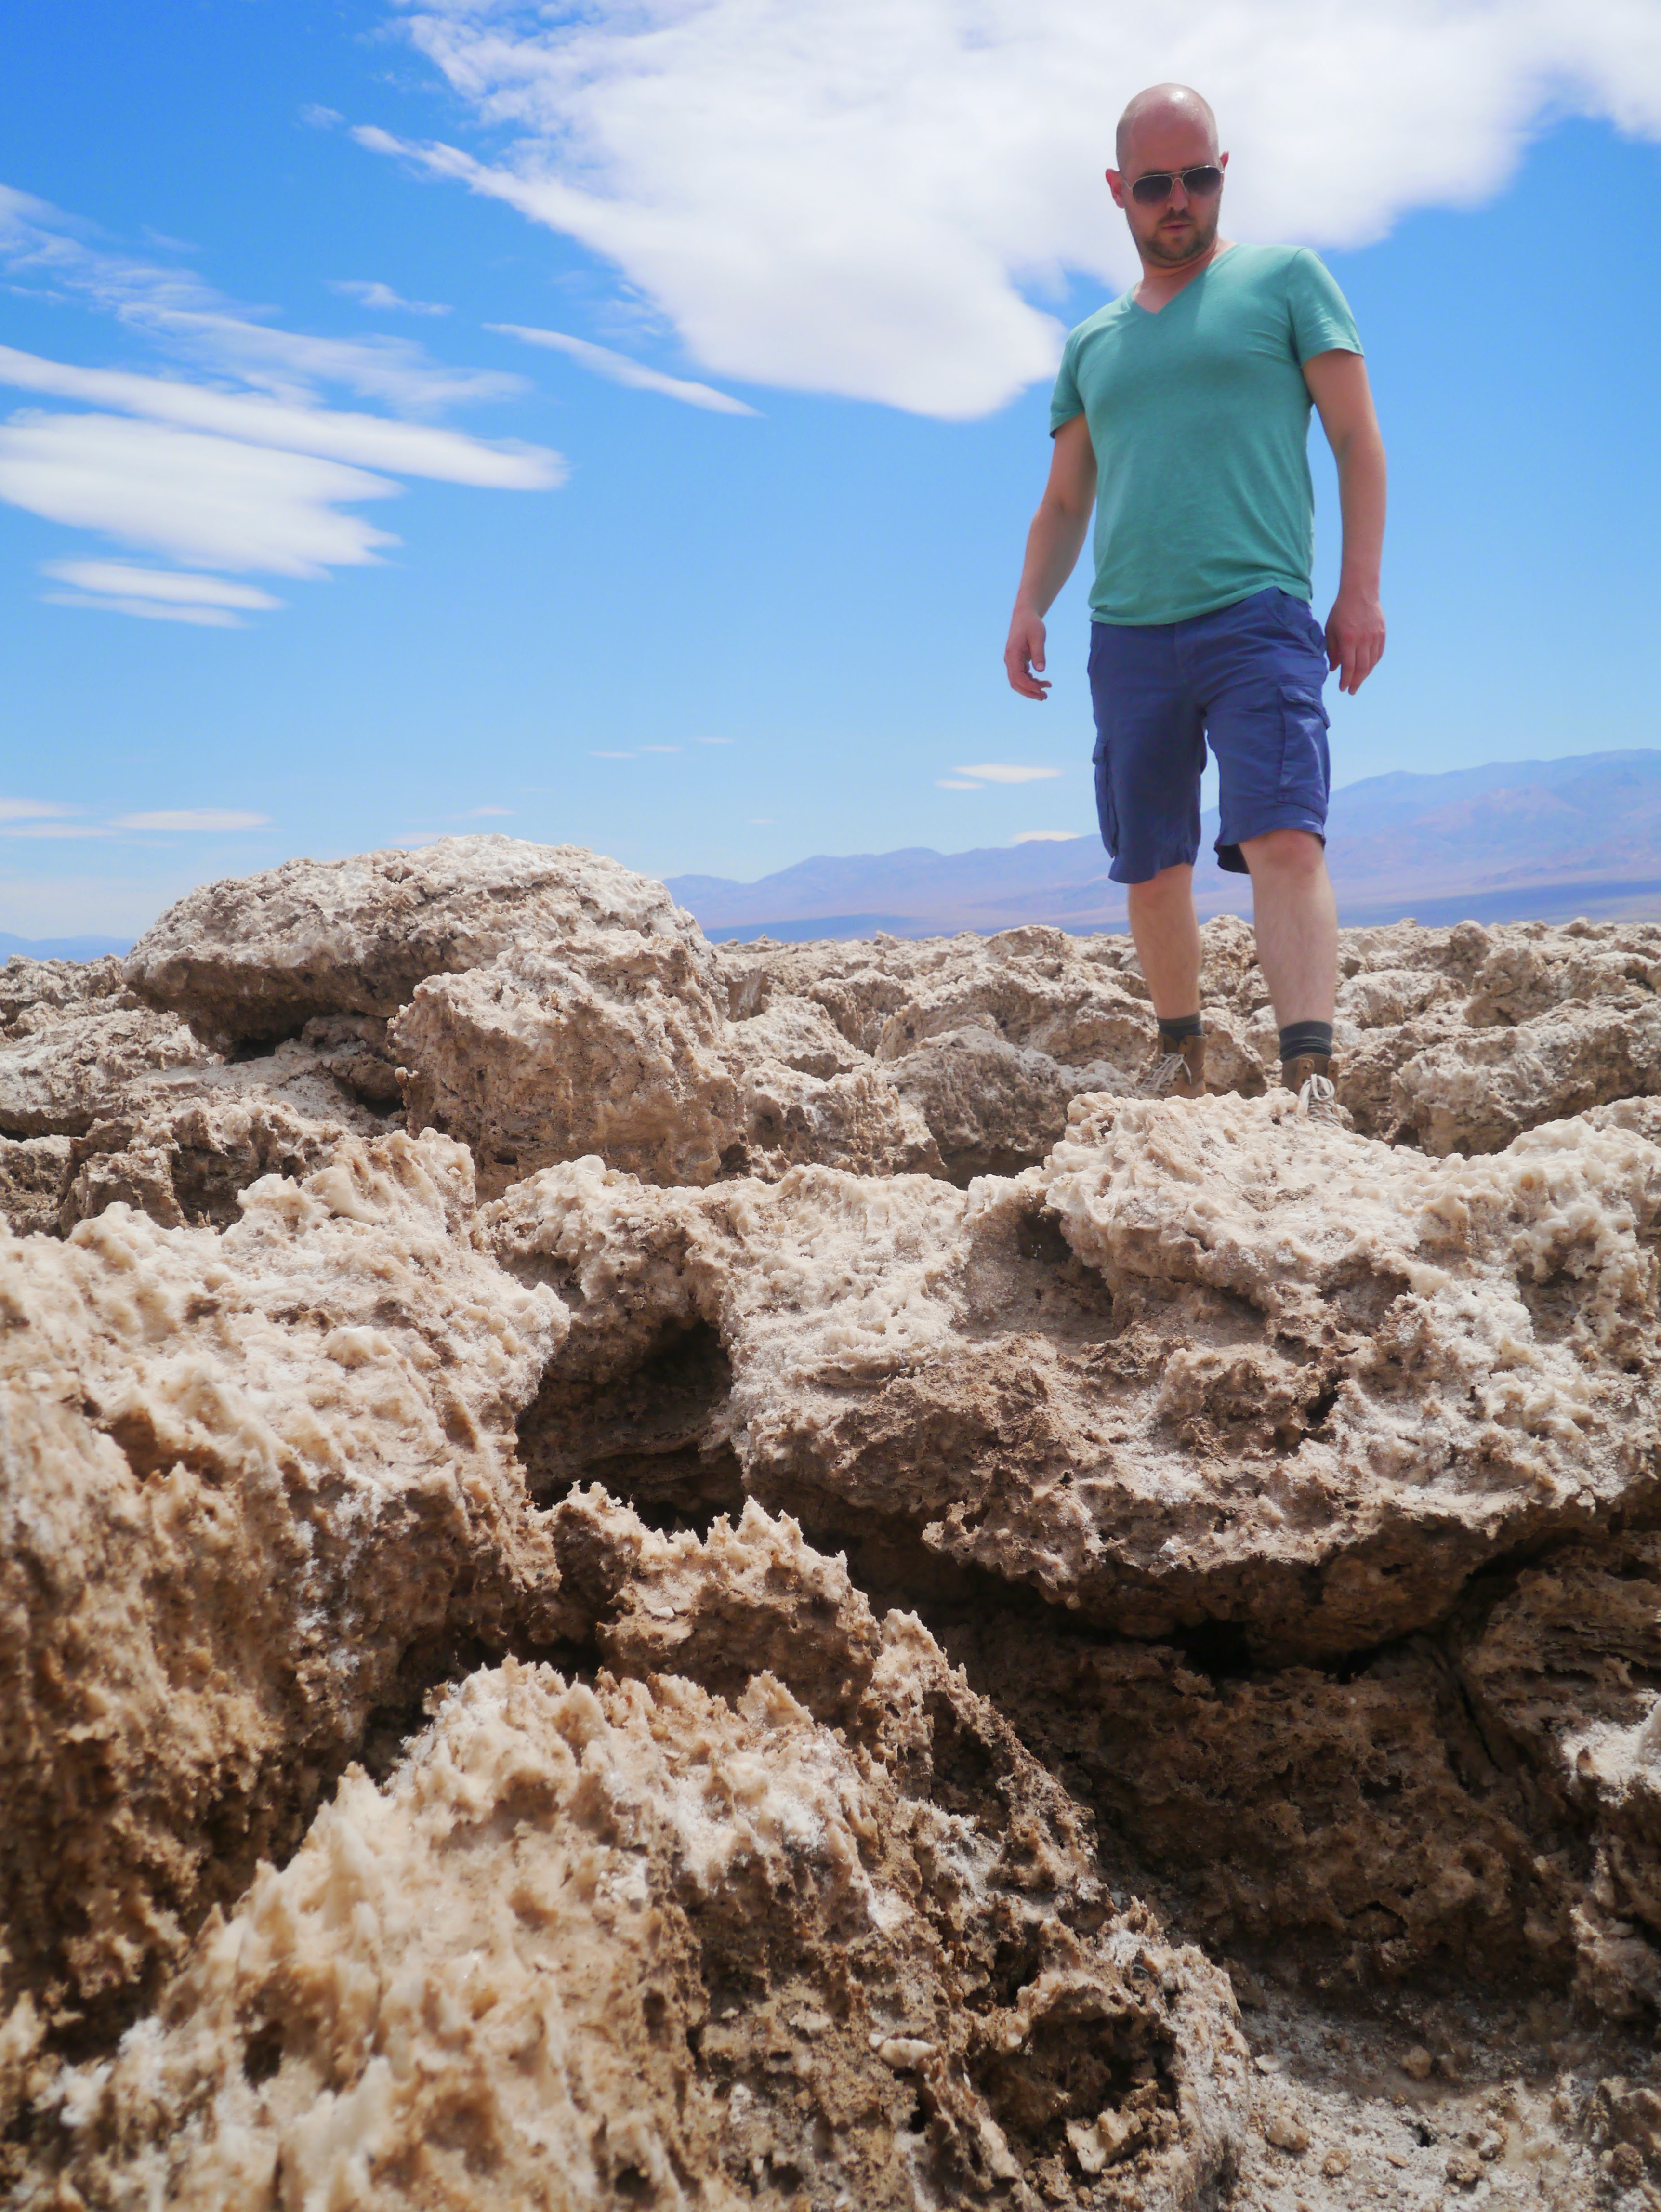 Death Valley 5